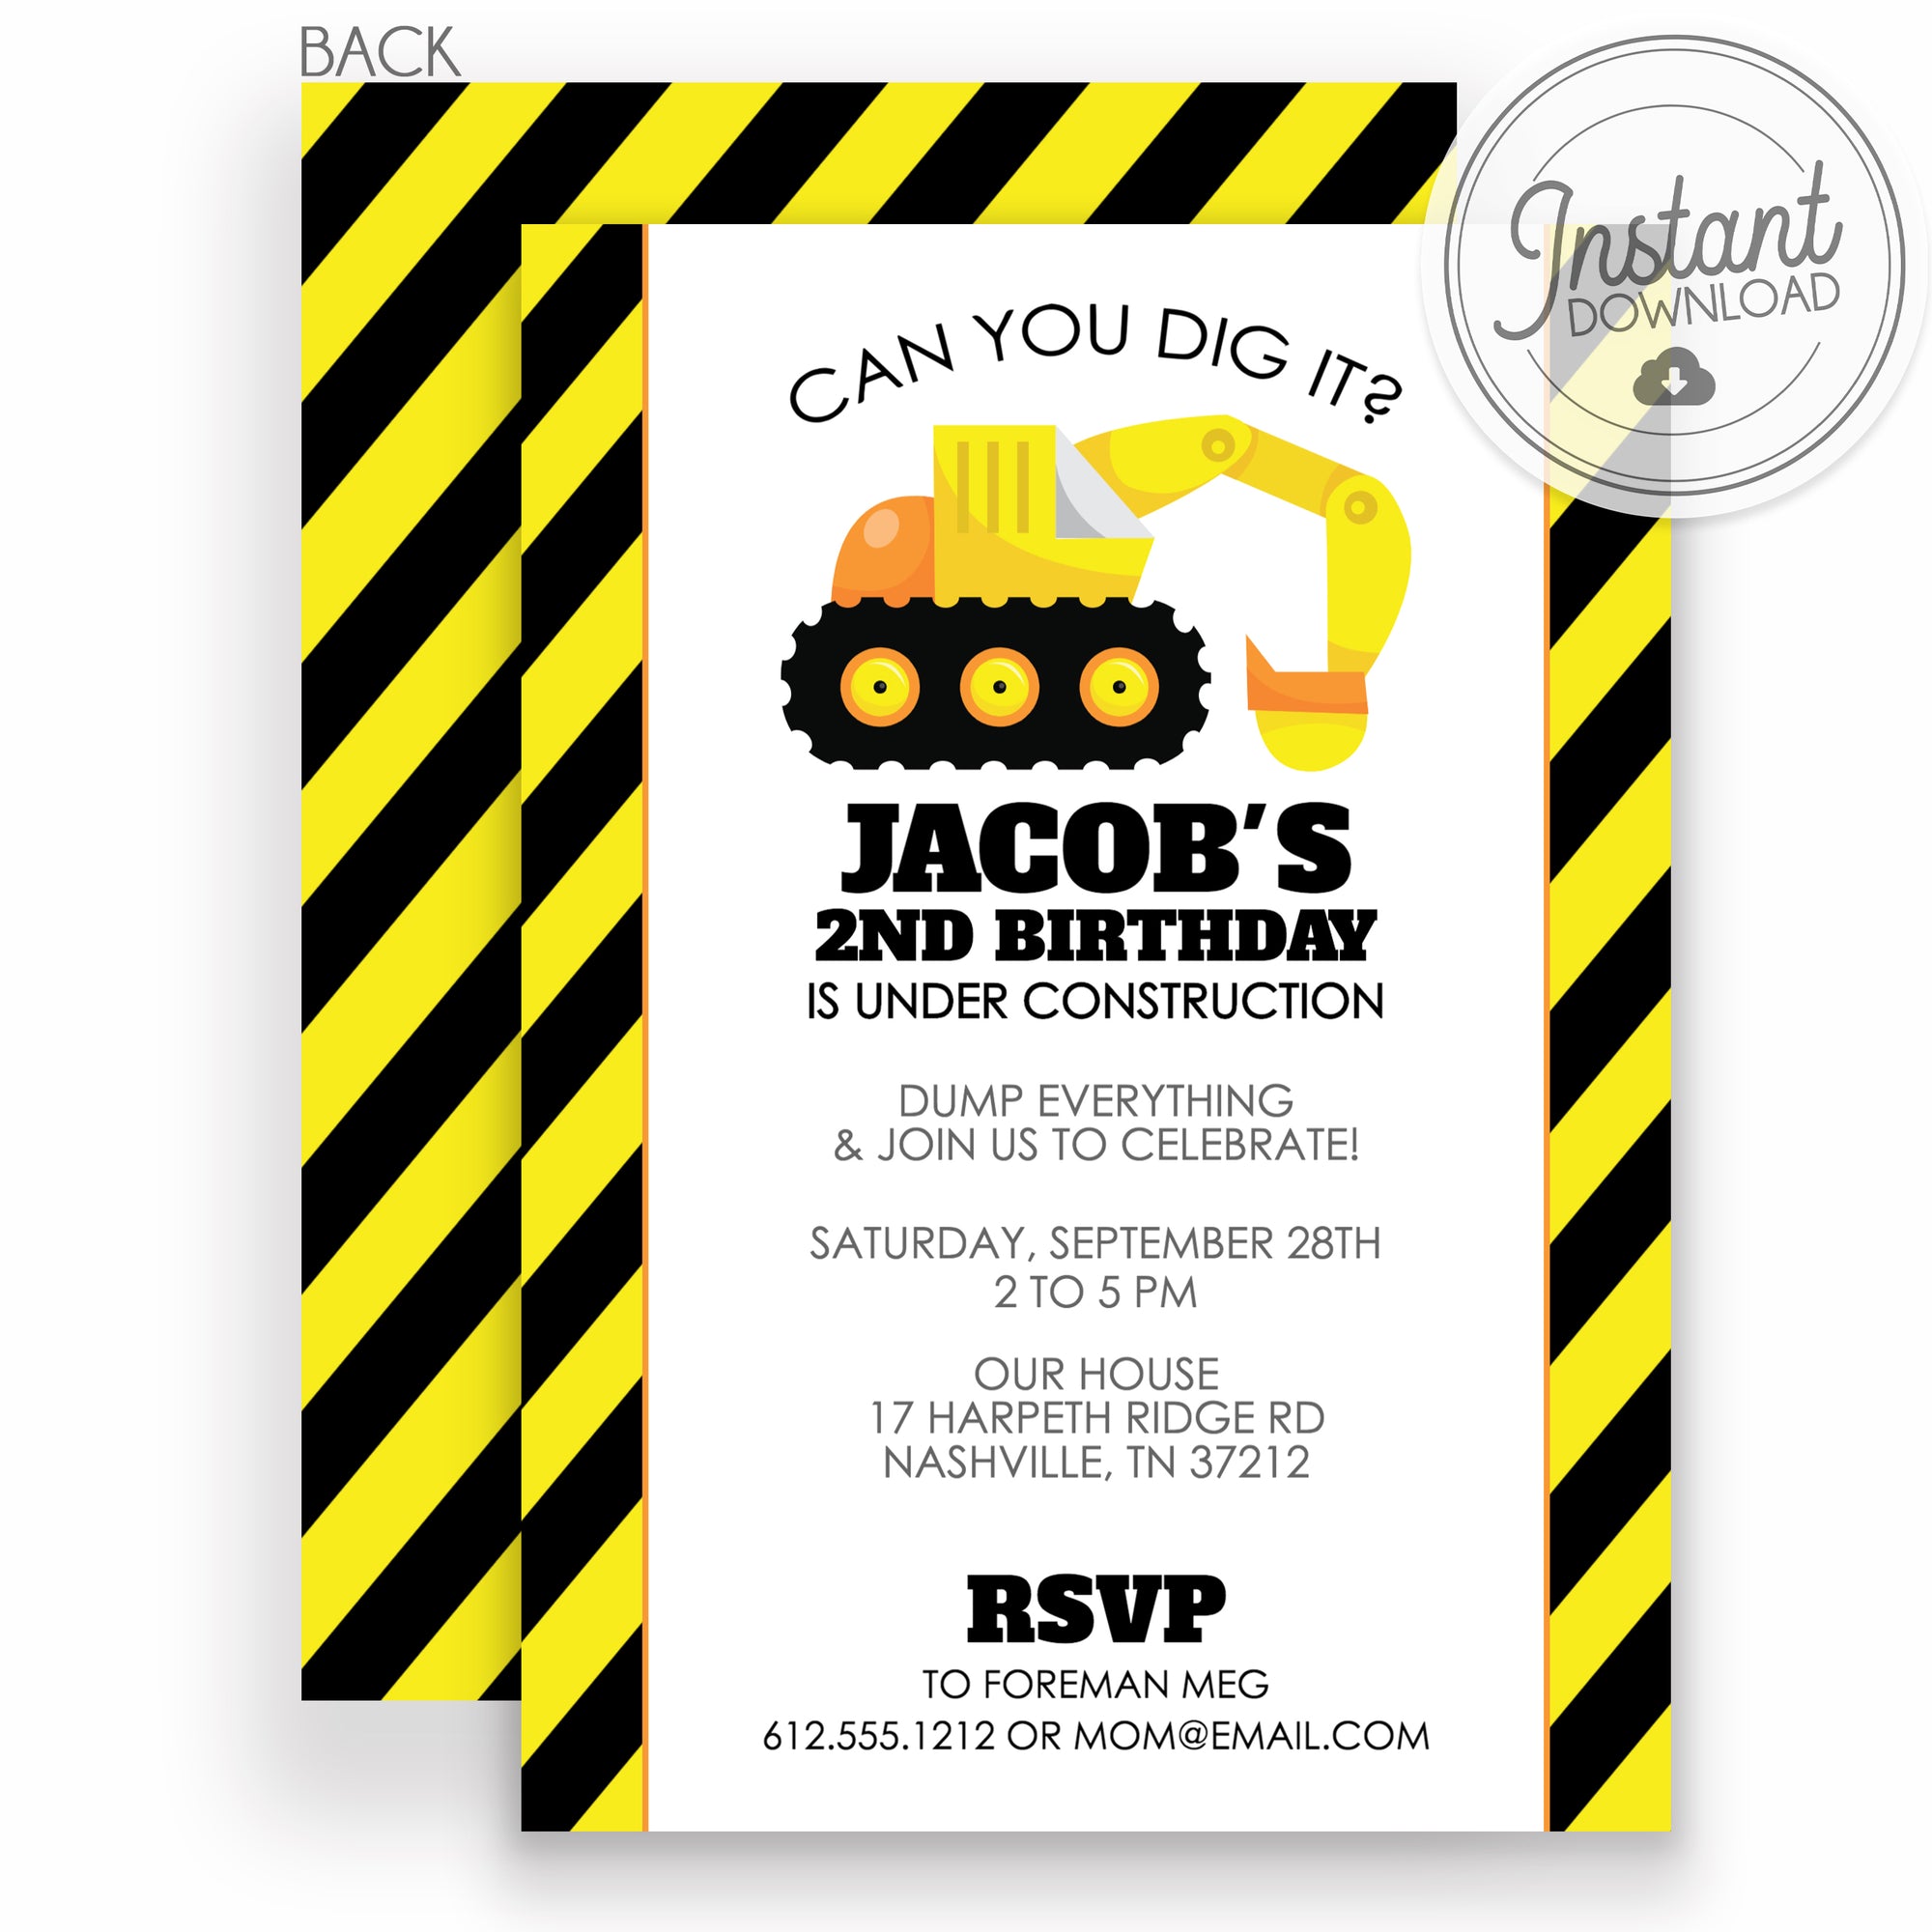 Backhoe Birthday Party Invitation | Excavator | Construction Party | DIY Instant Download | Templett Invitation | PIPSY.COM